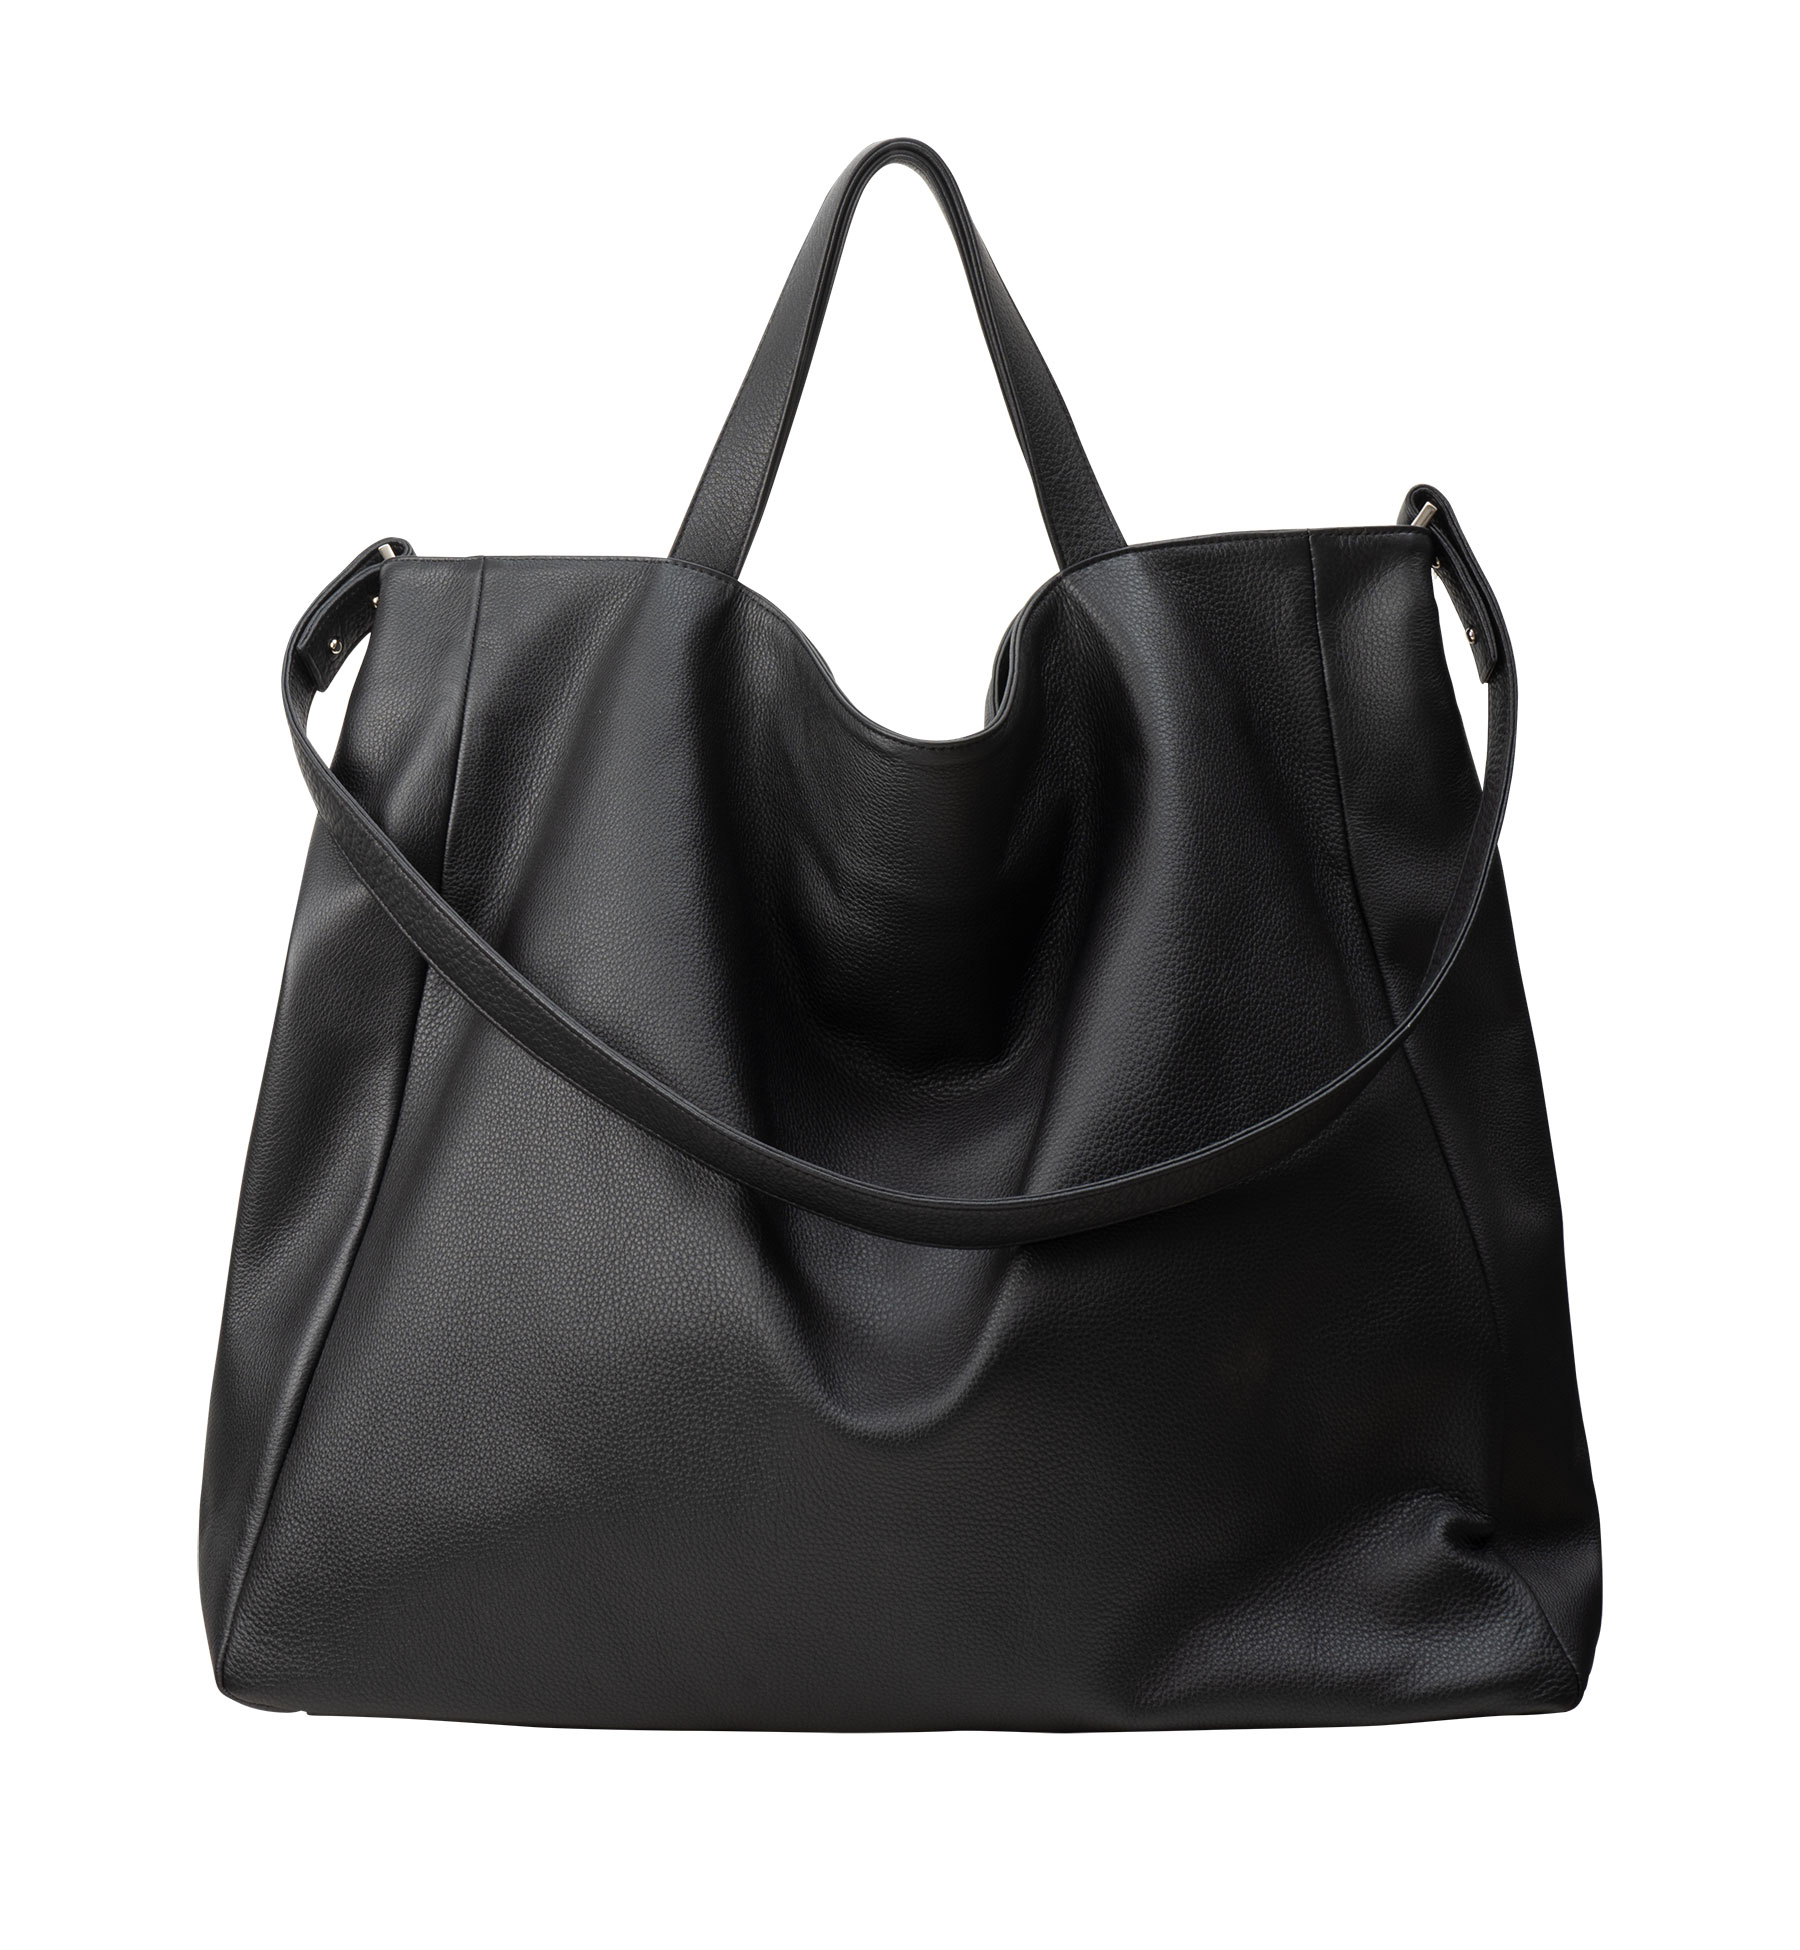 FABER TWO shoulder bag in black calfskin leather | TSATSAS